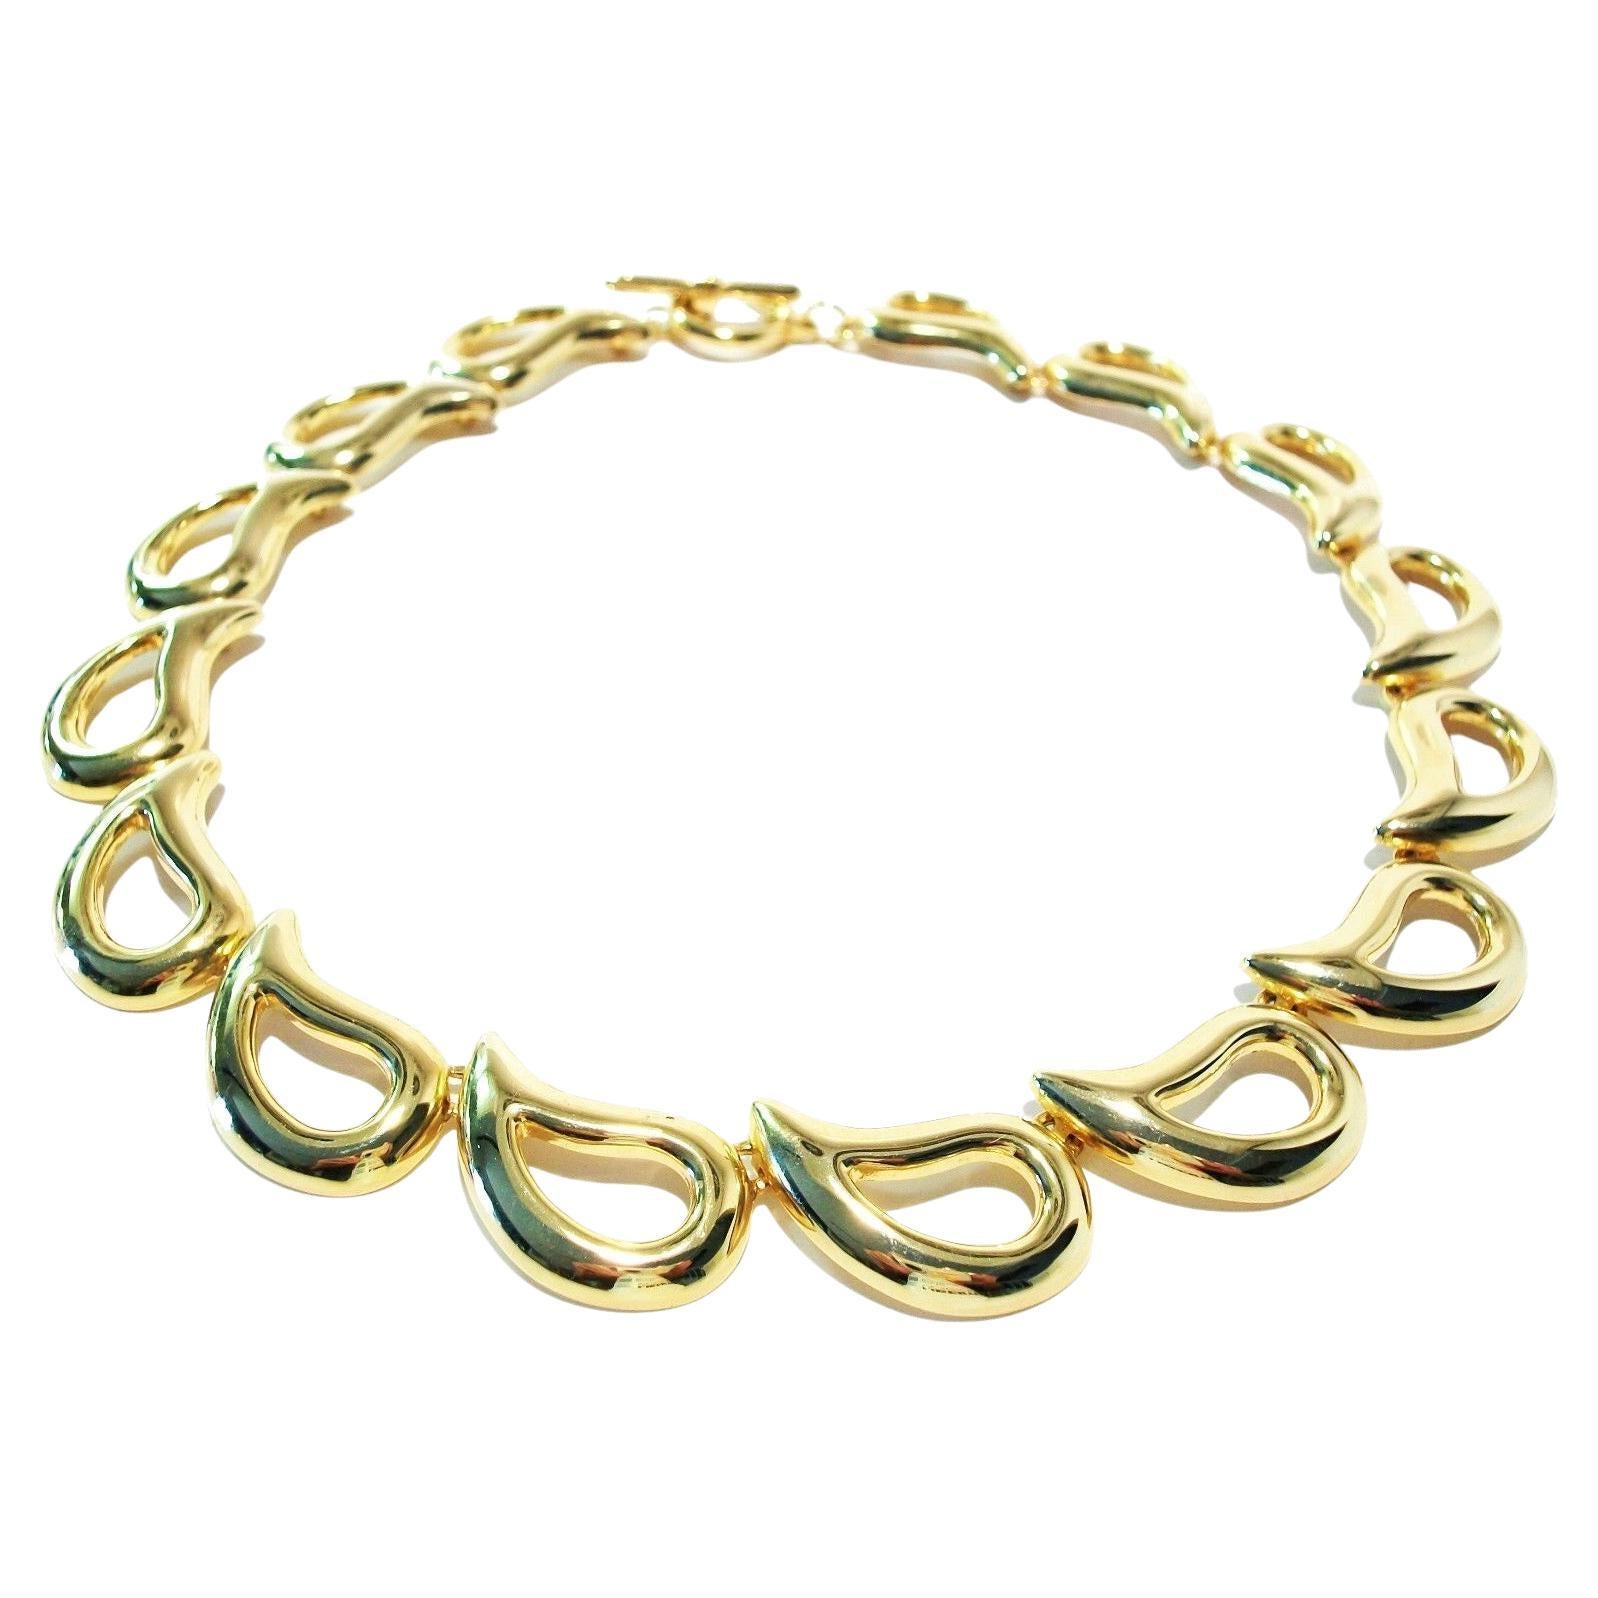 Vintage Gold Tone Teardrop Design Necklace - Toggle Closure - Unsigned - C. 1980 For Sale